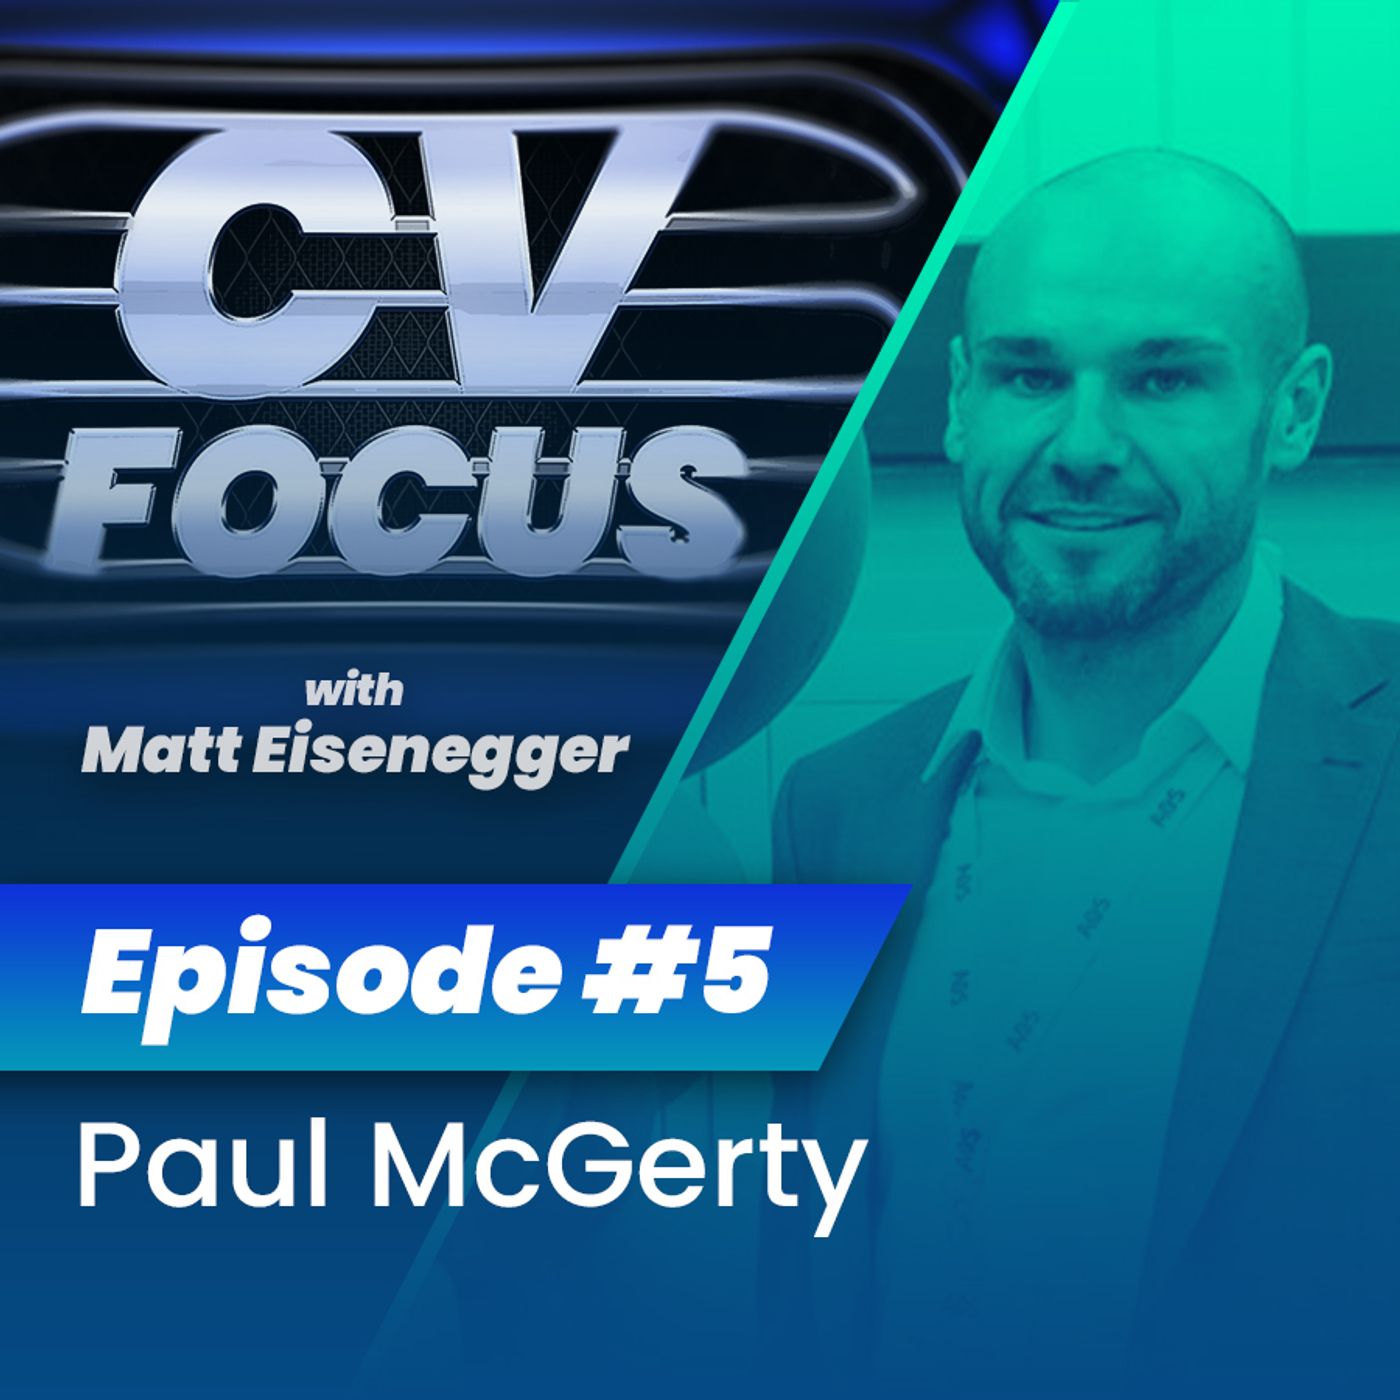 5: CV Focus episode 5 - Paul McGerty